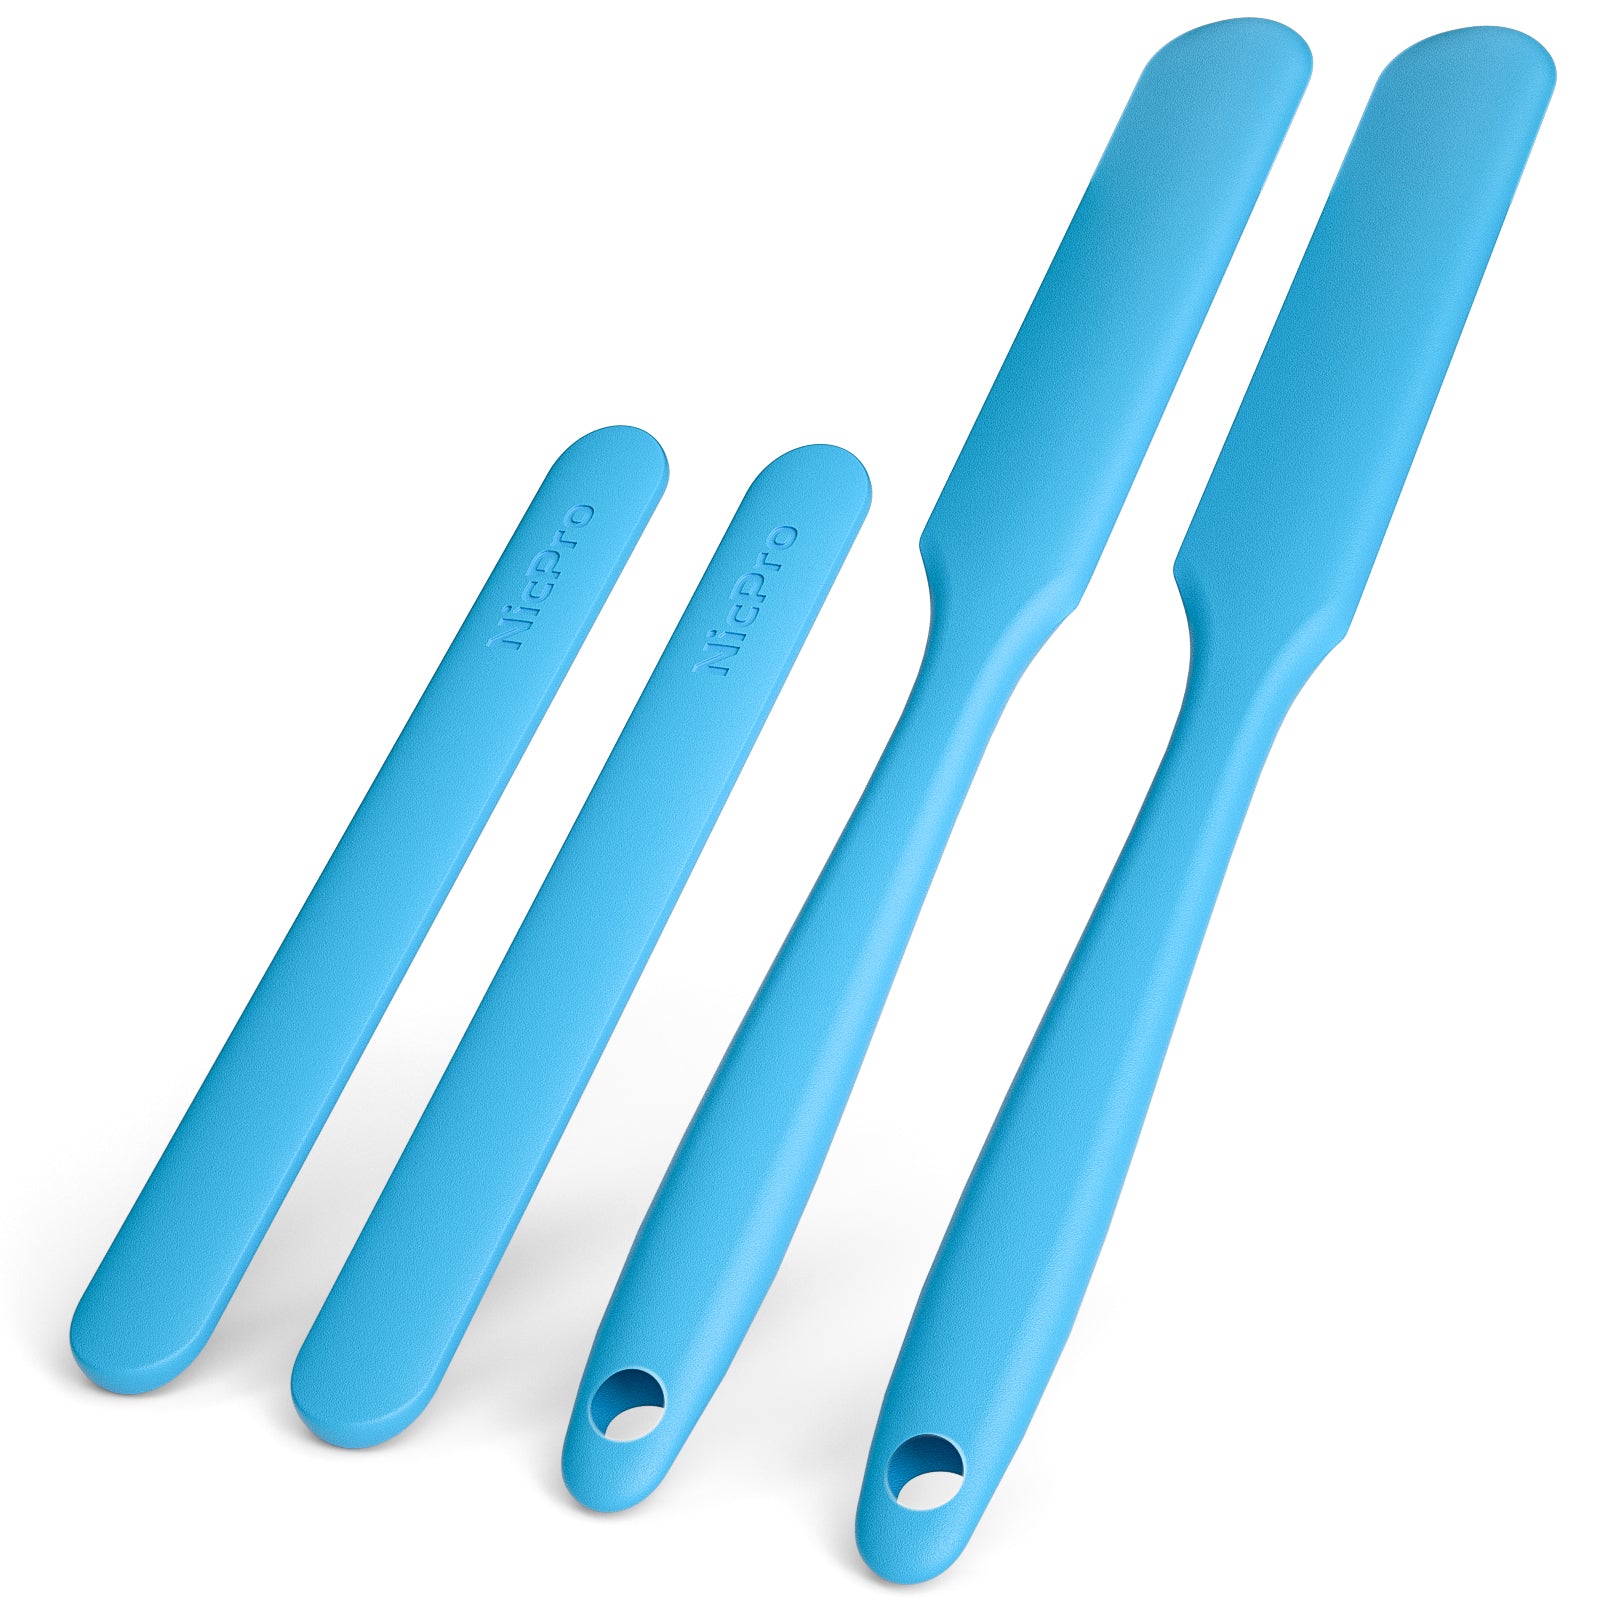  Gartful 9PCS Colored Silicone Stir Sticks, Reusable